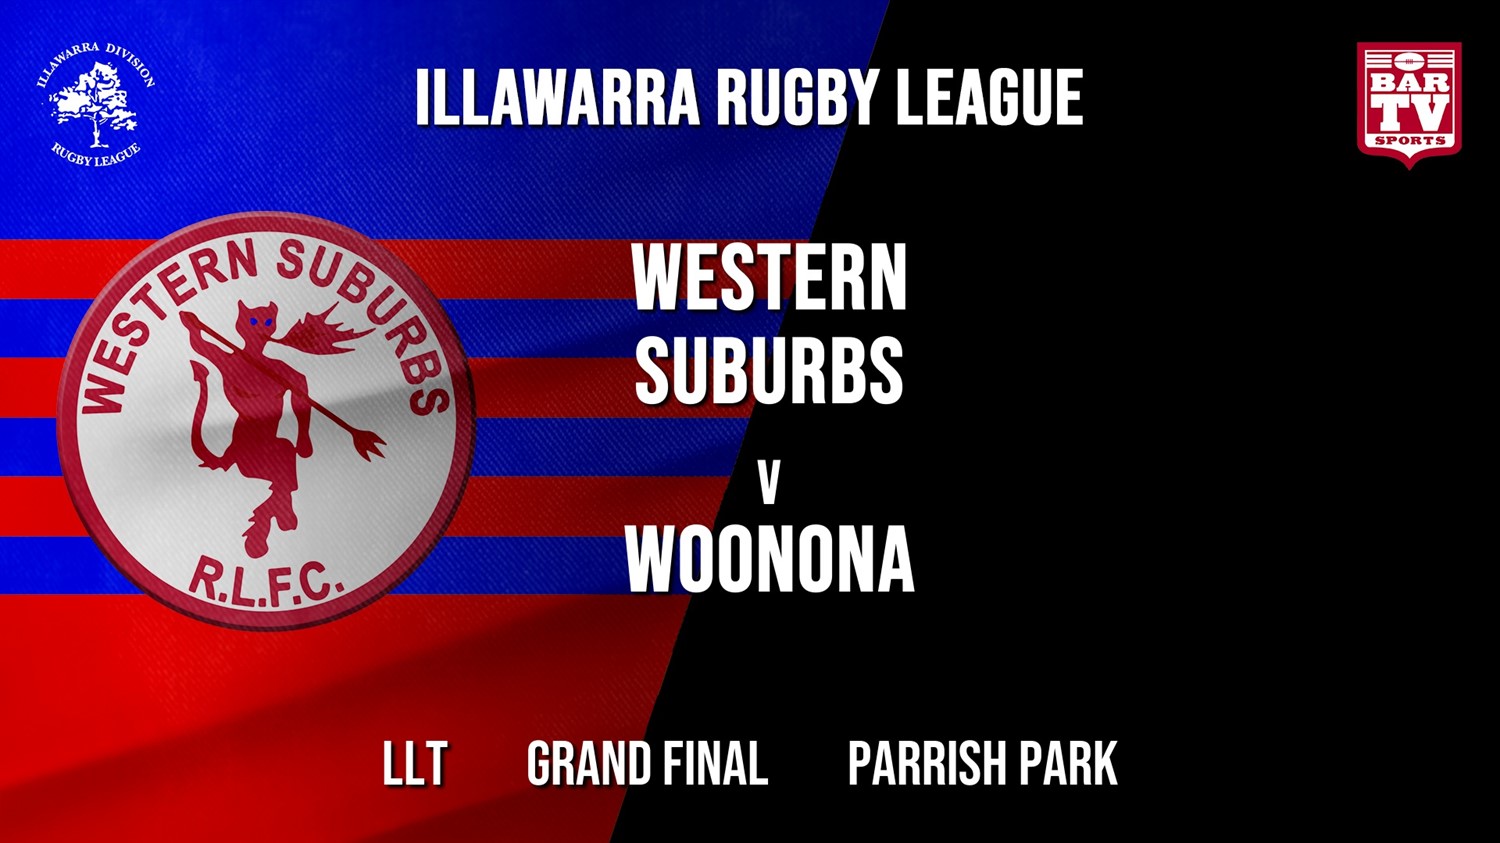 IRL Grand Final - LLT - Western Suburbs Devils v Woonona Bushrangers Minigame Slate Image